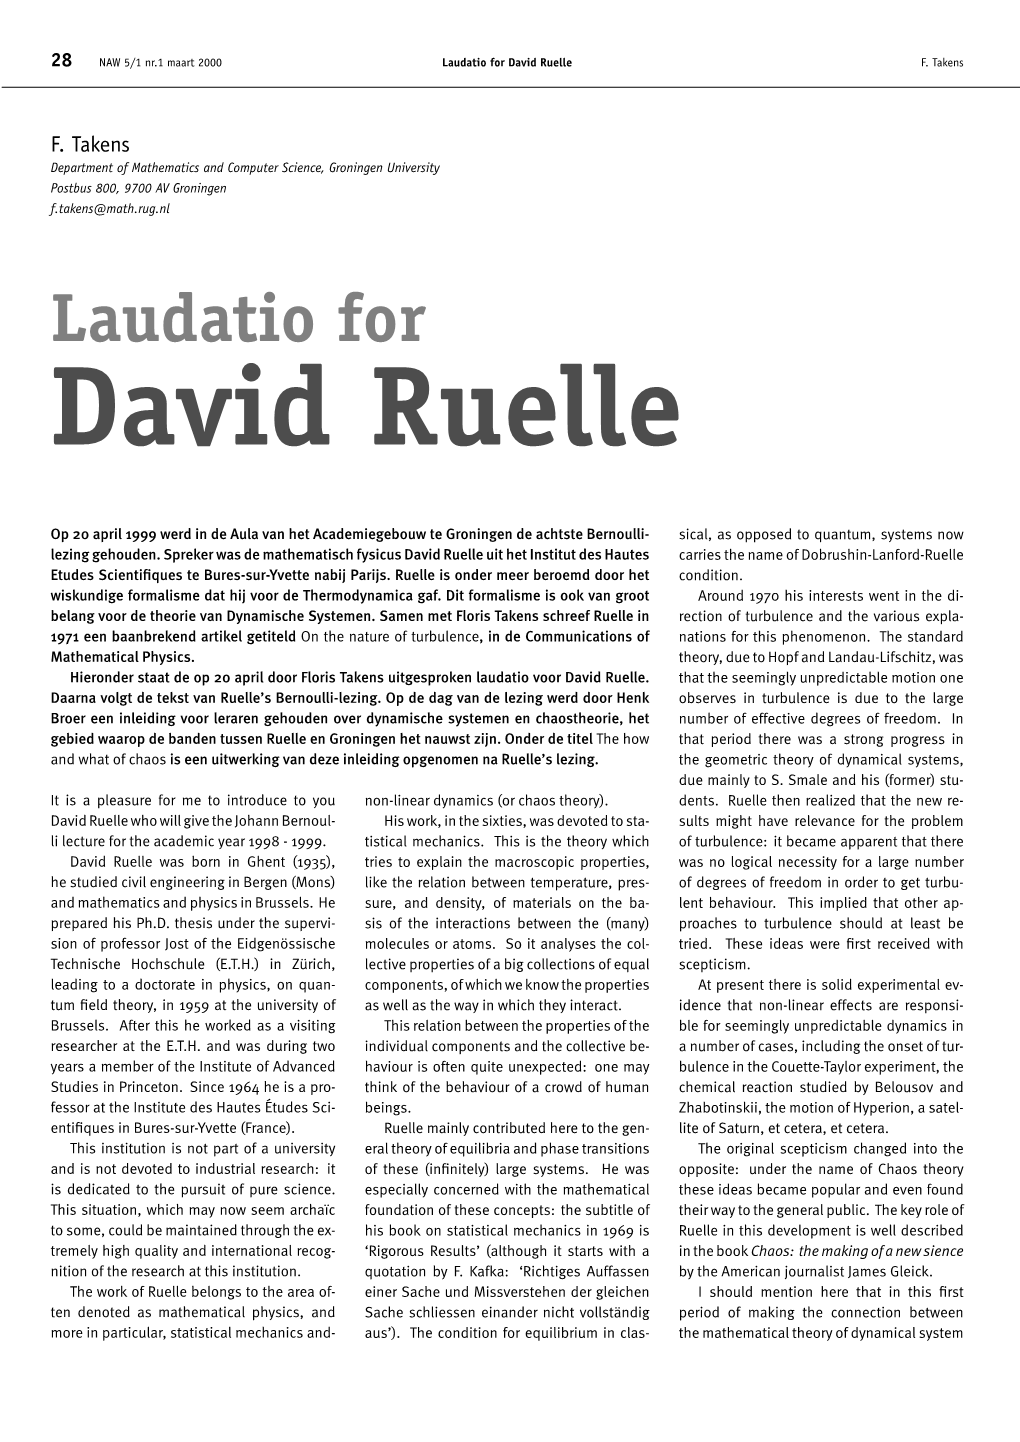 David Ruelle F